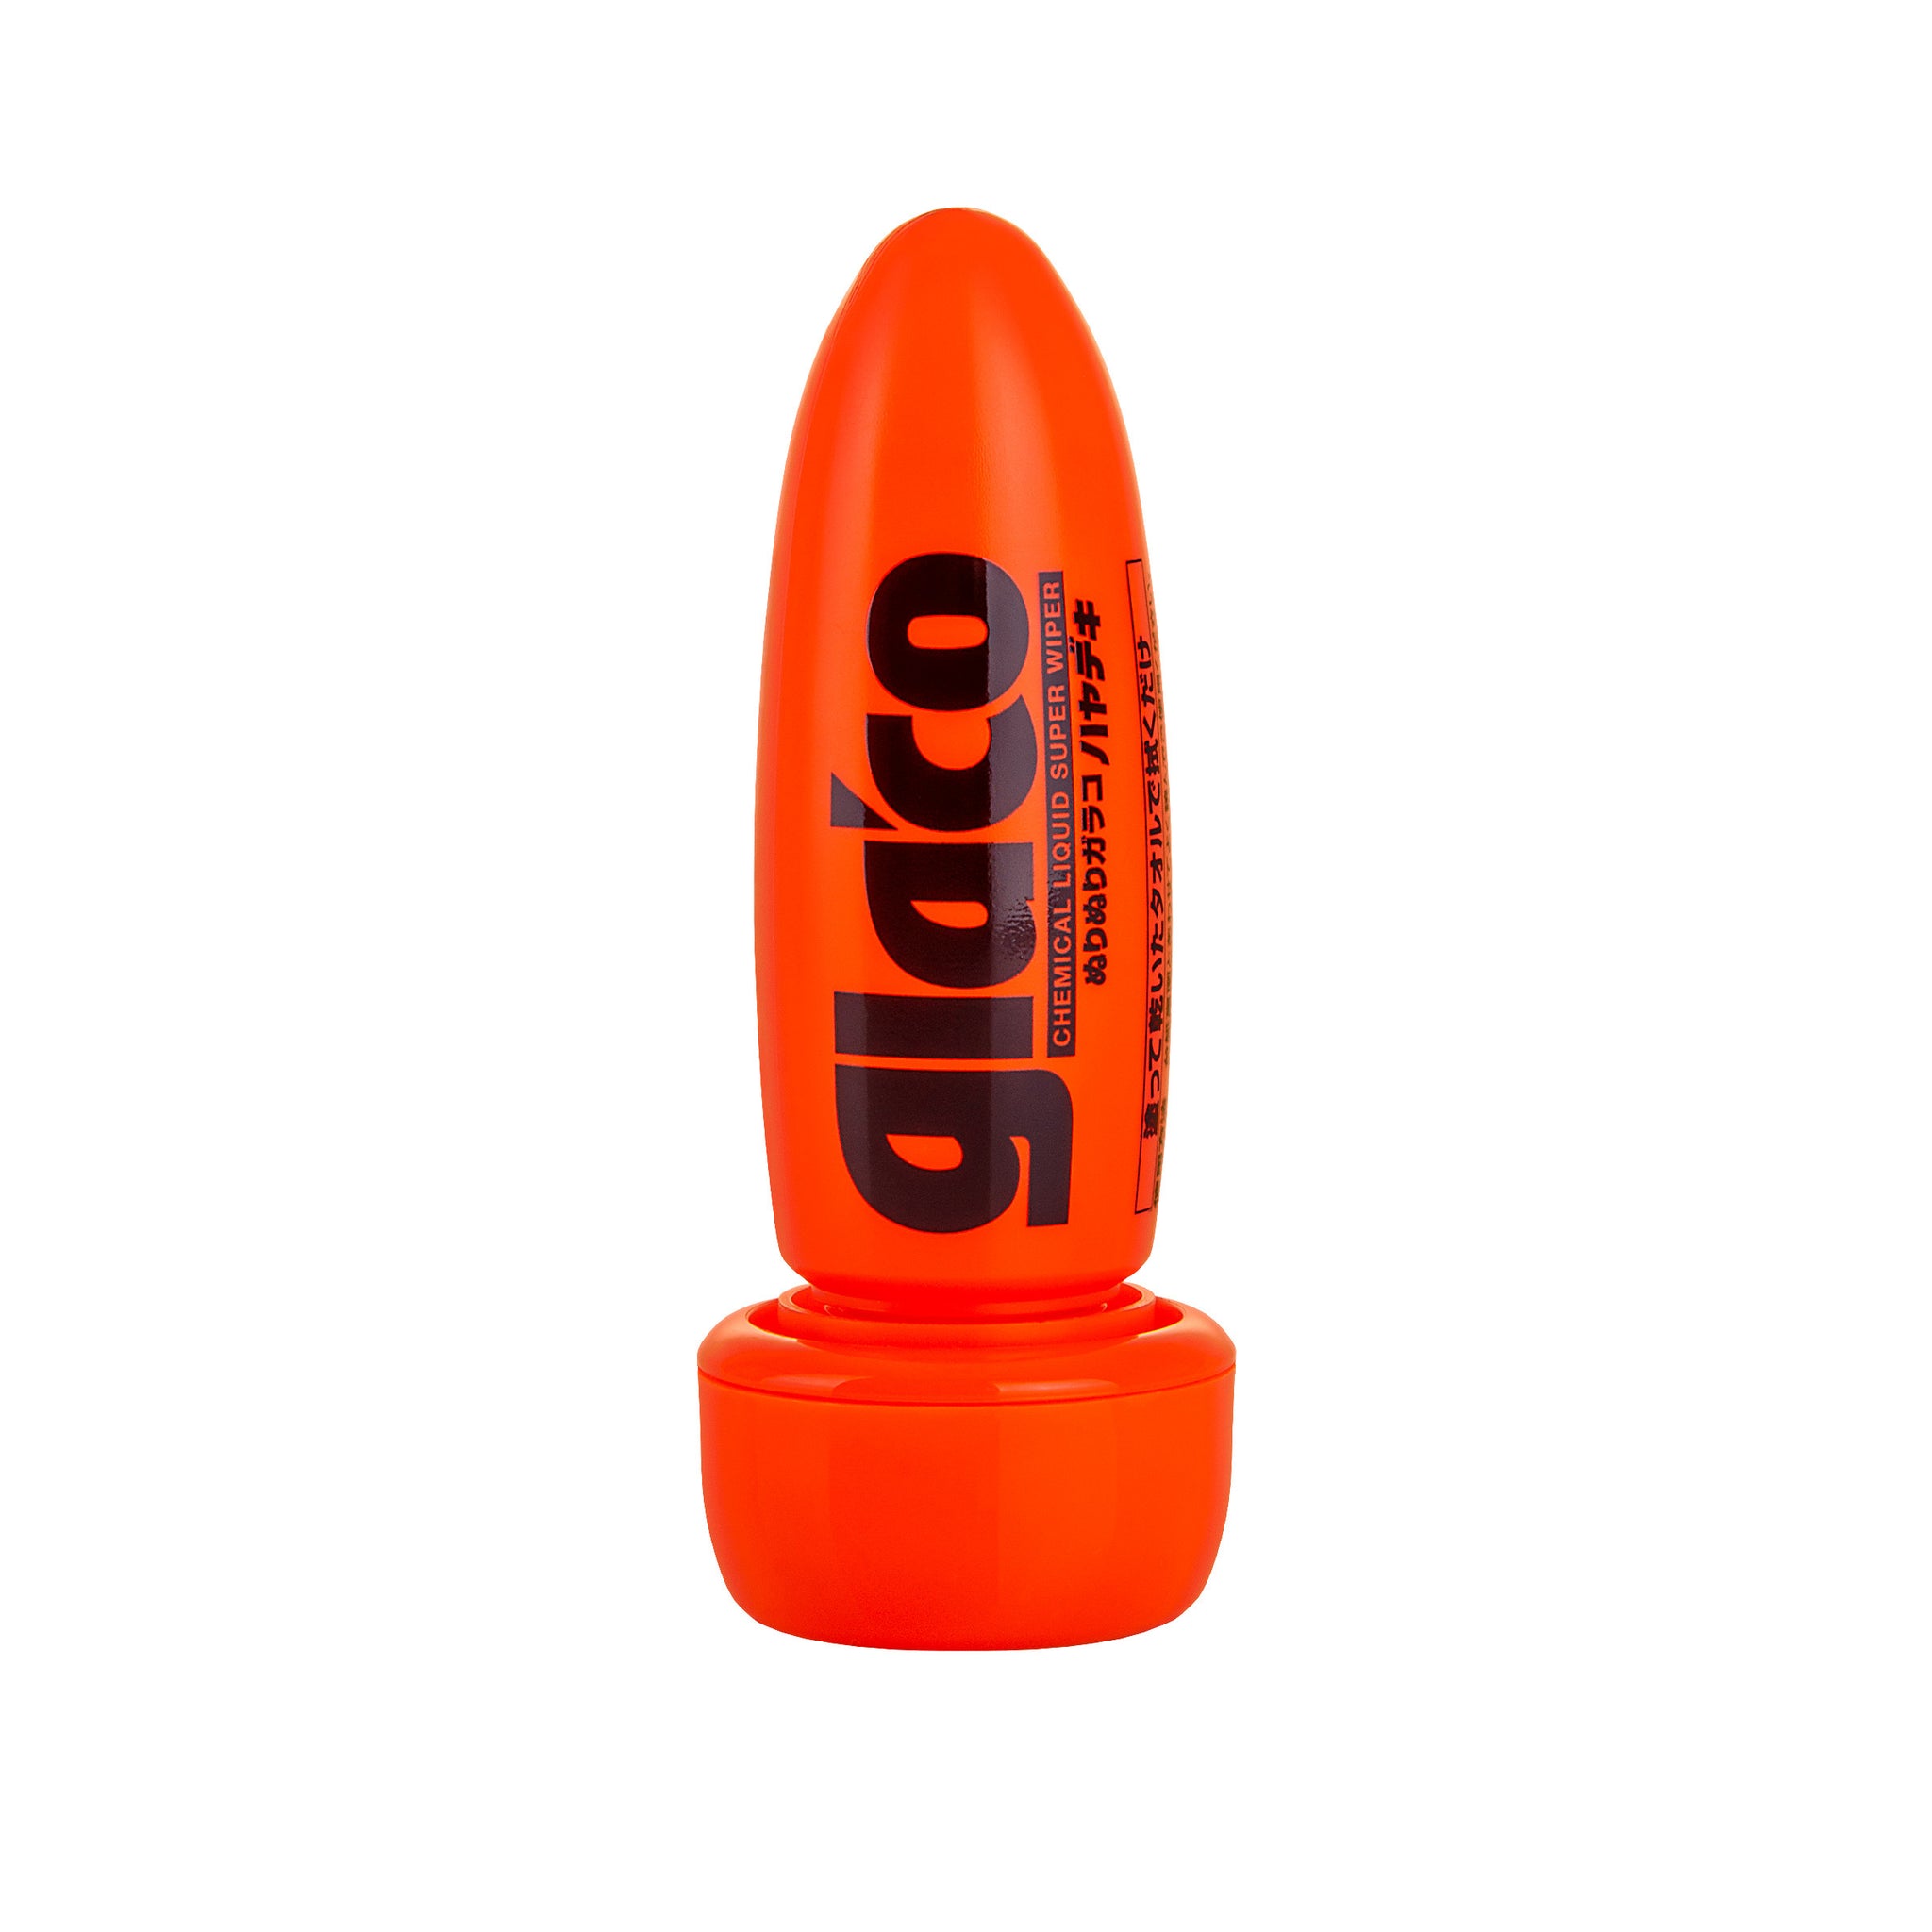 Glaco - Glaco Q 75ml